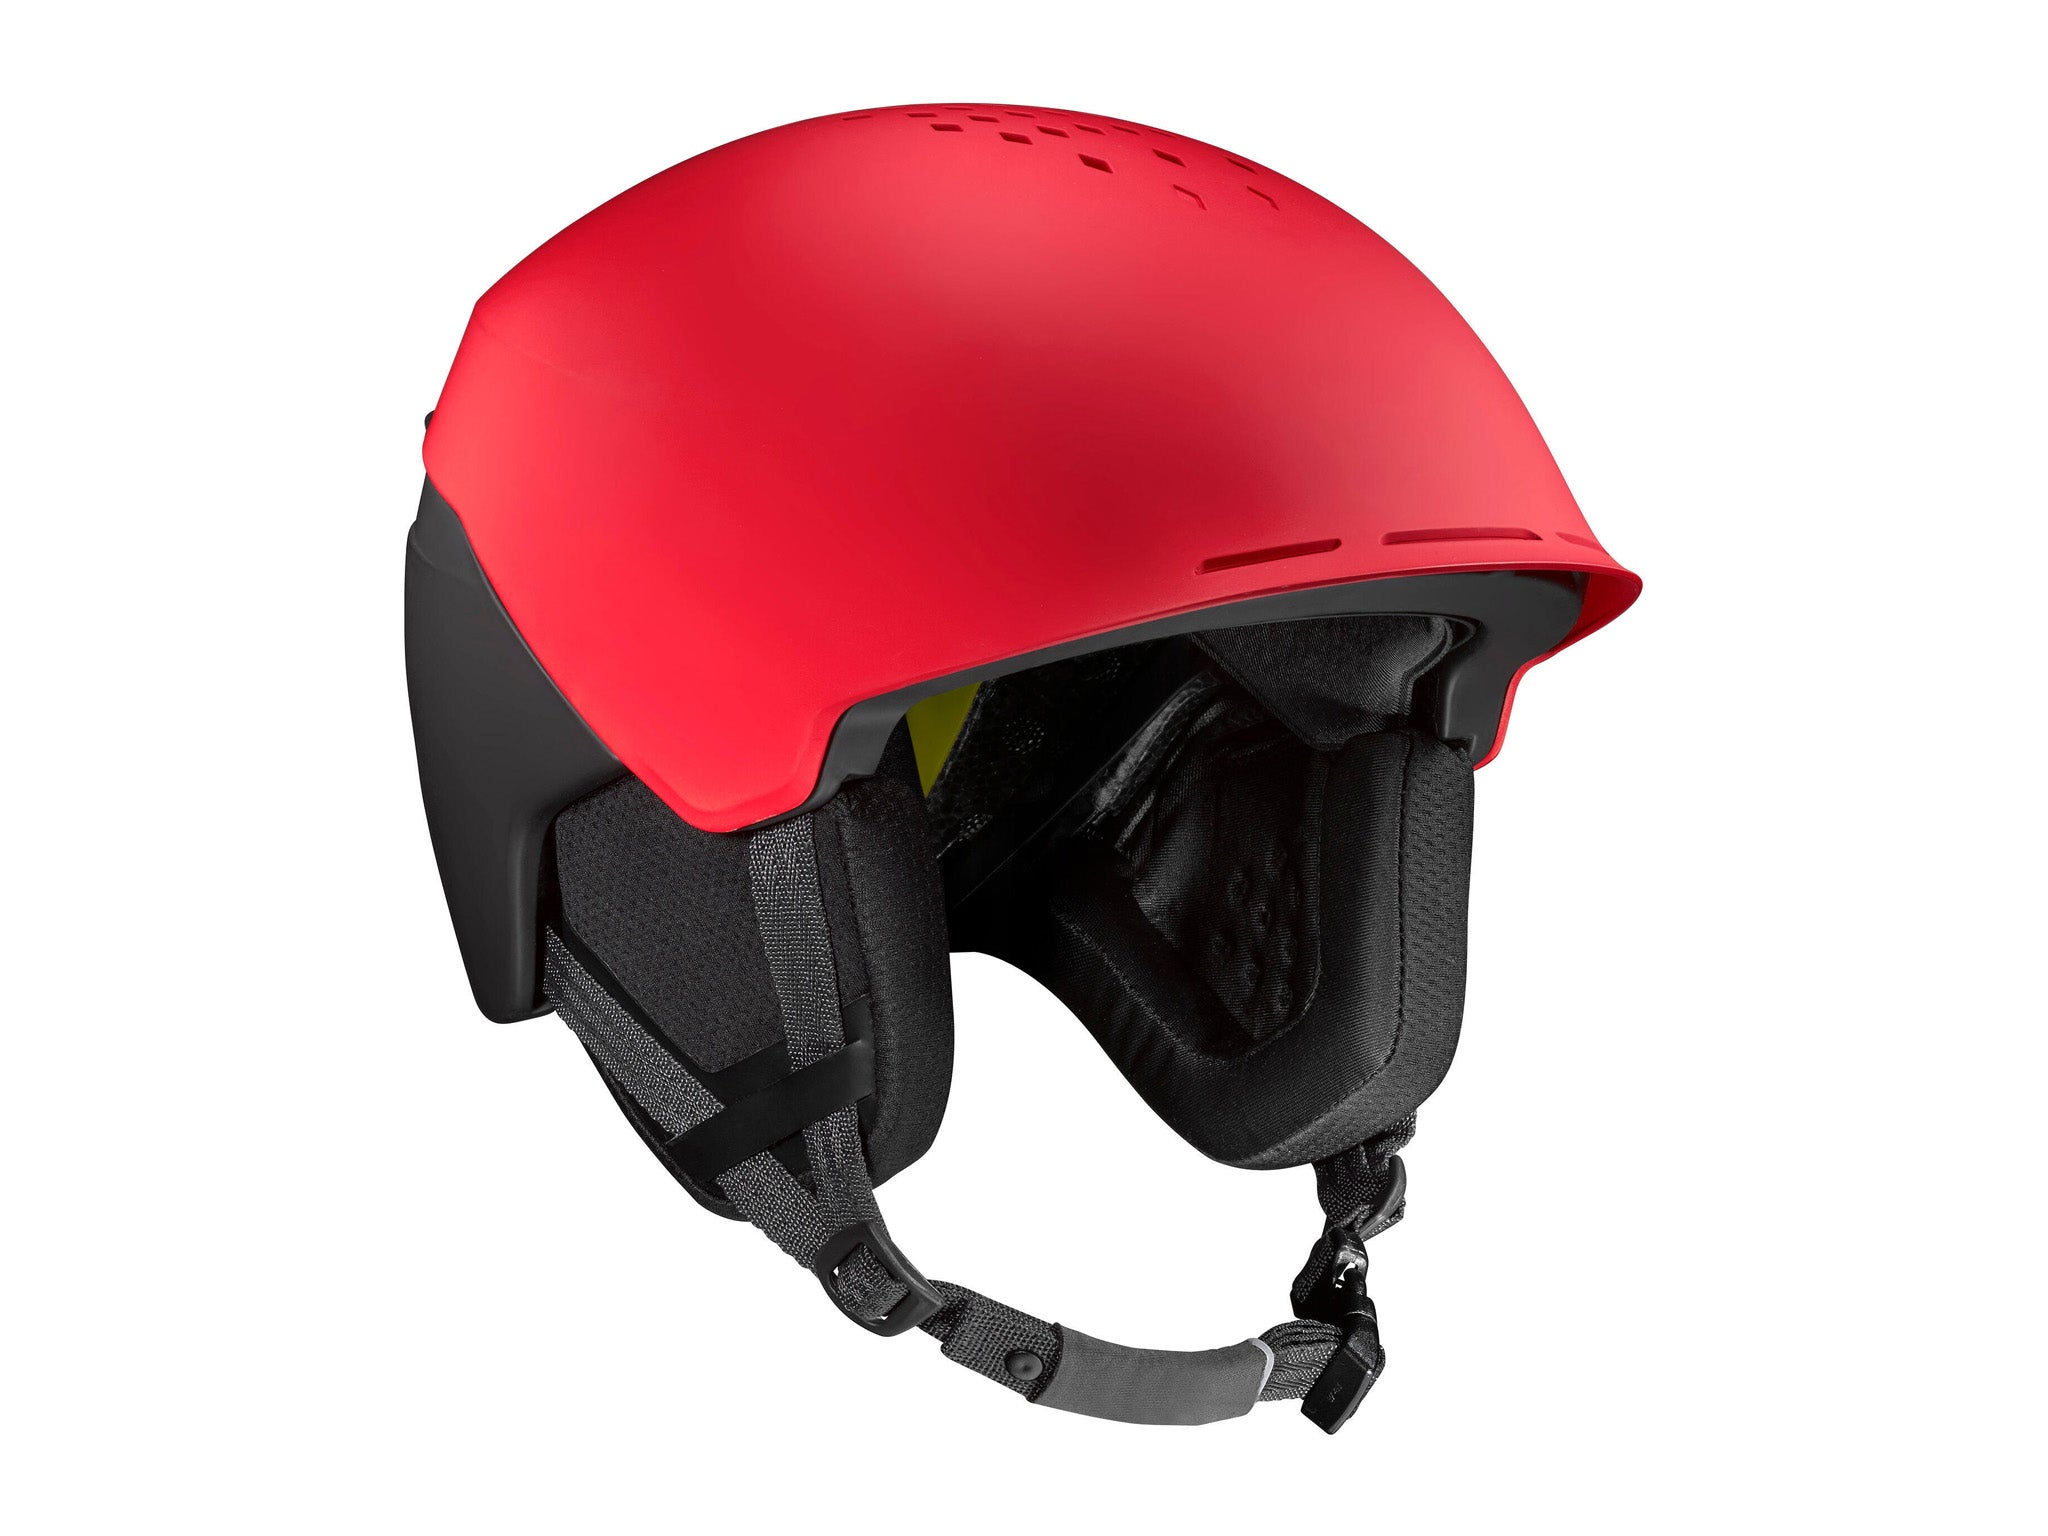 Decathlon-ski-helmet-Indybest-review